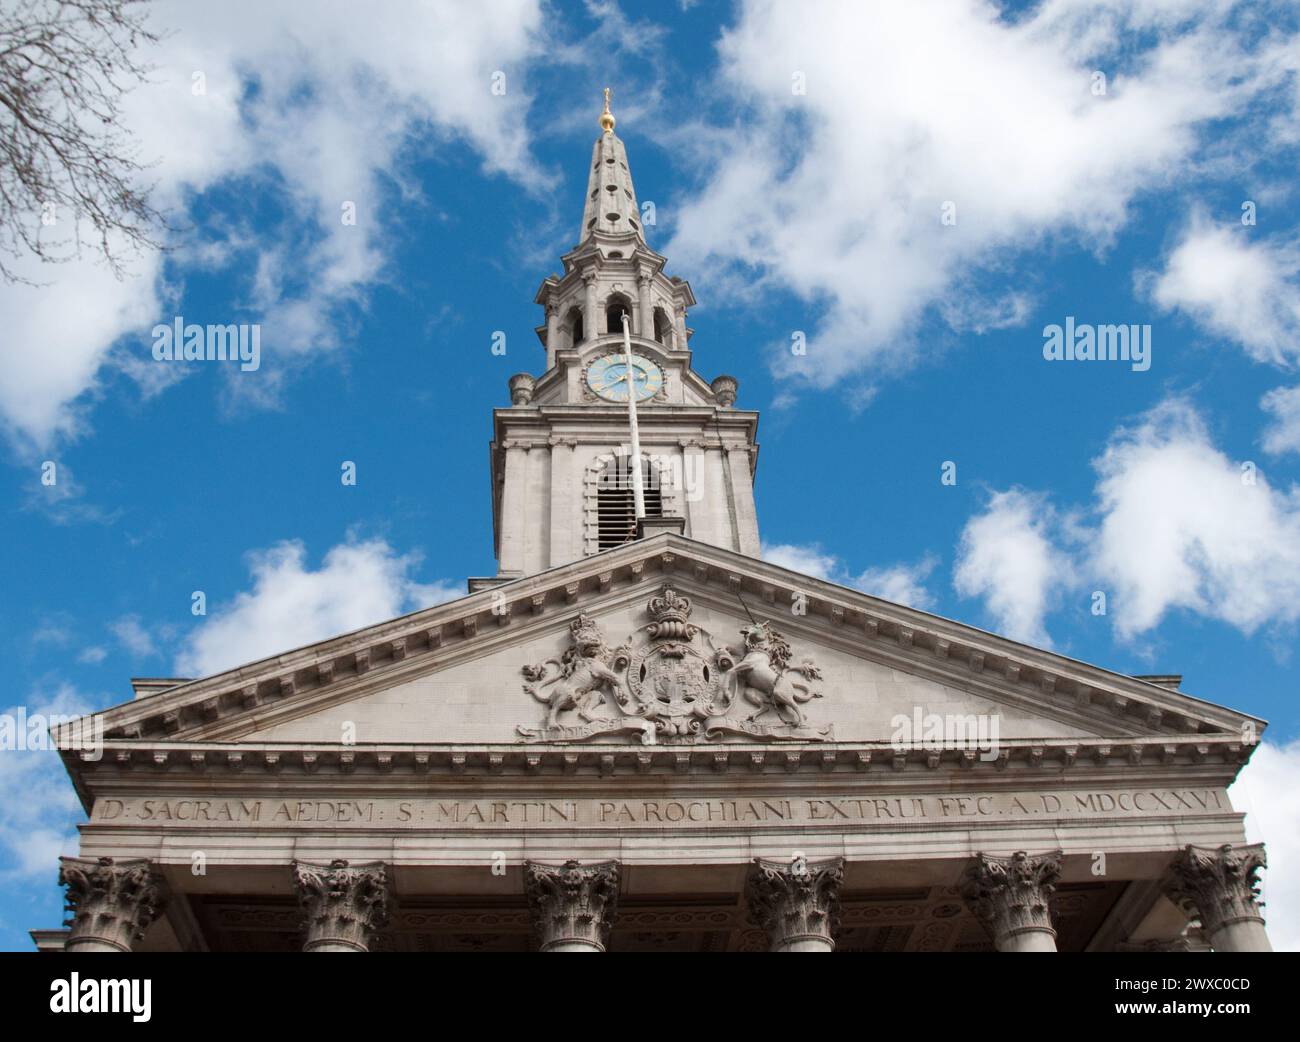 St Martin-in-the-Fields, Trafalgar Square, London, Großbritannien. St Martin-in-the-Fields ist eine Pfarrkirche der Church of England am Trafalgar Square. Stockfoto